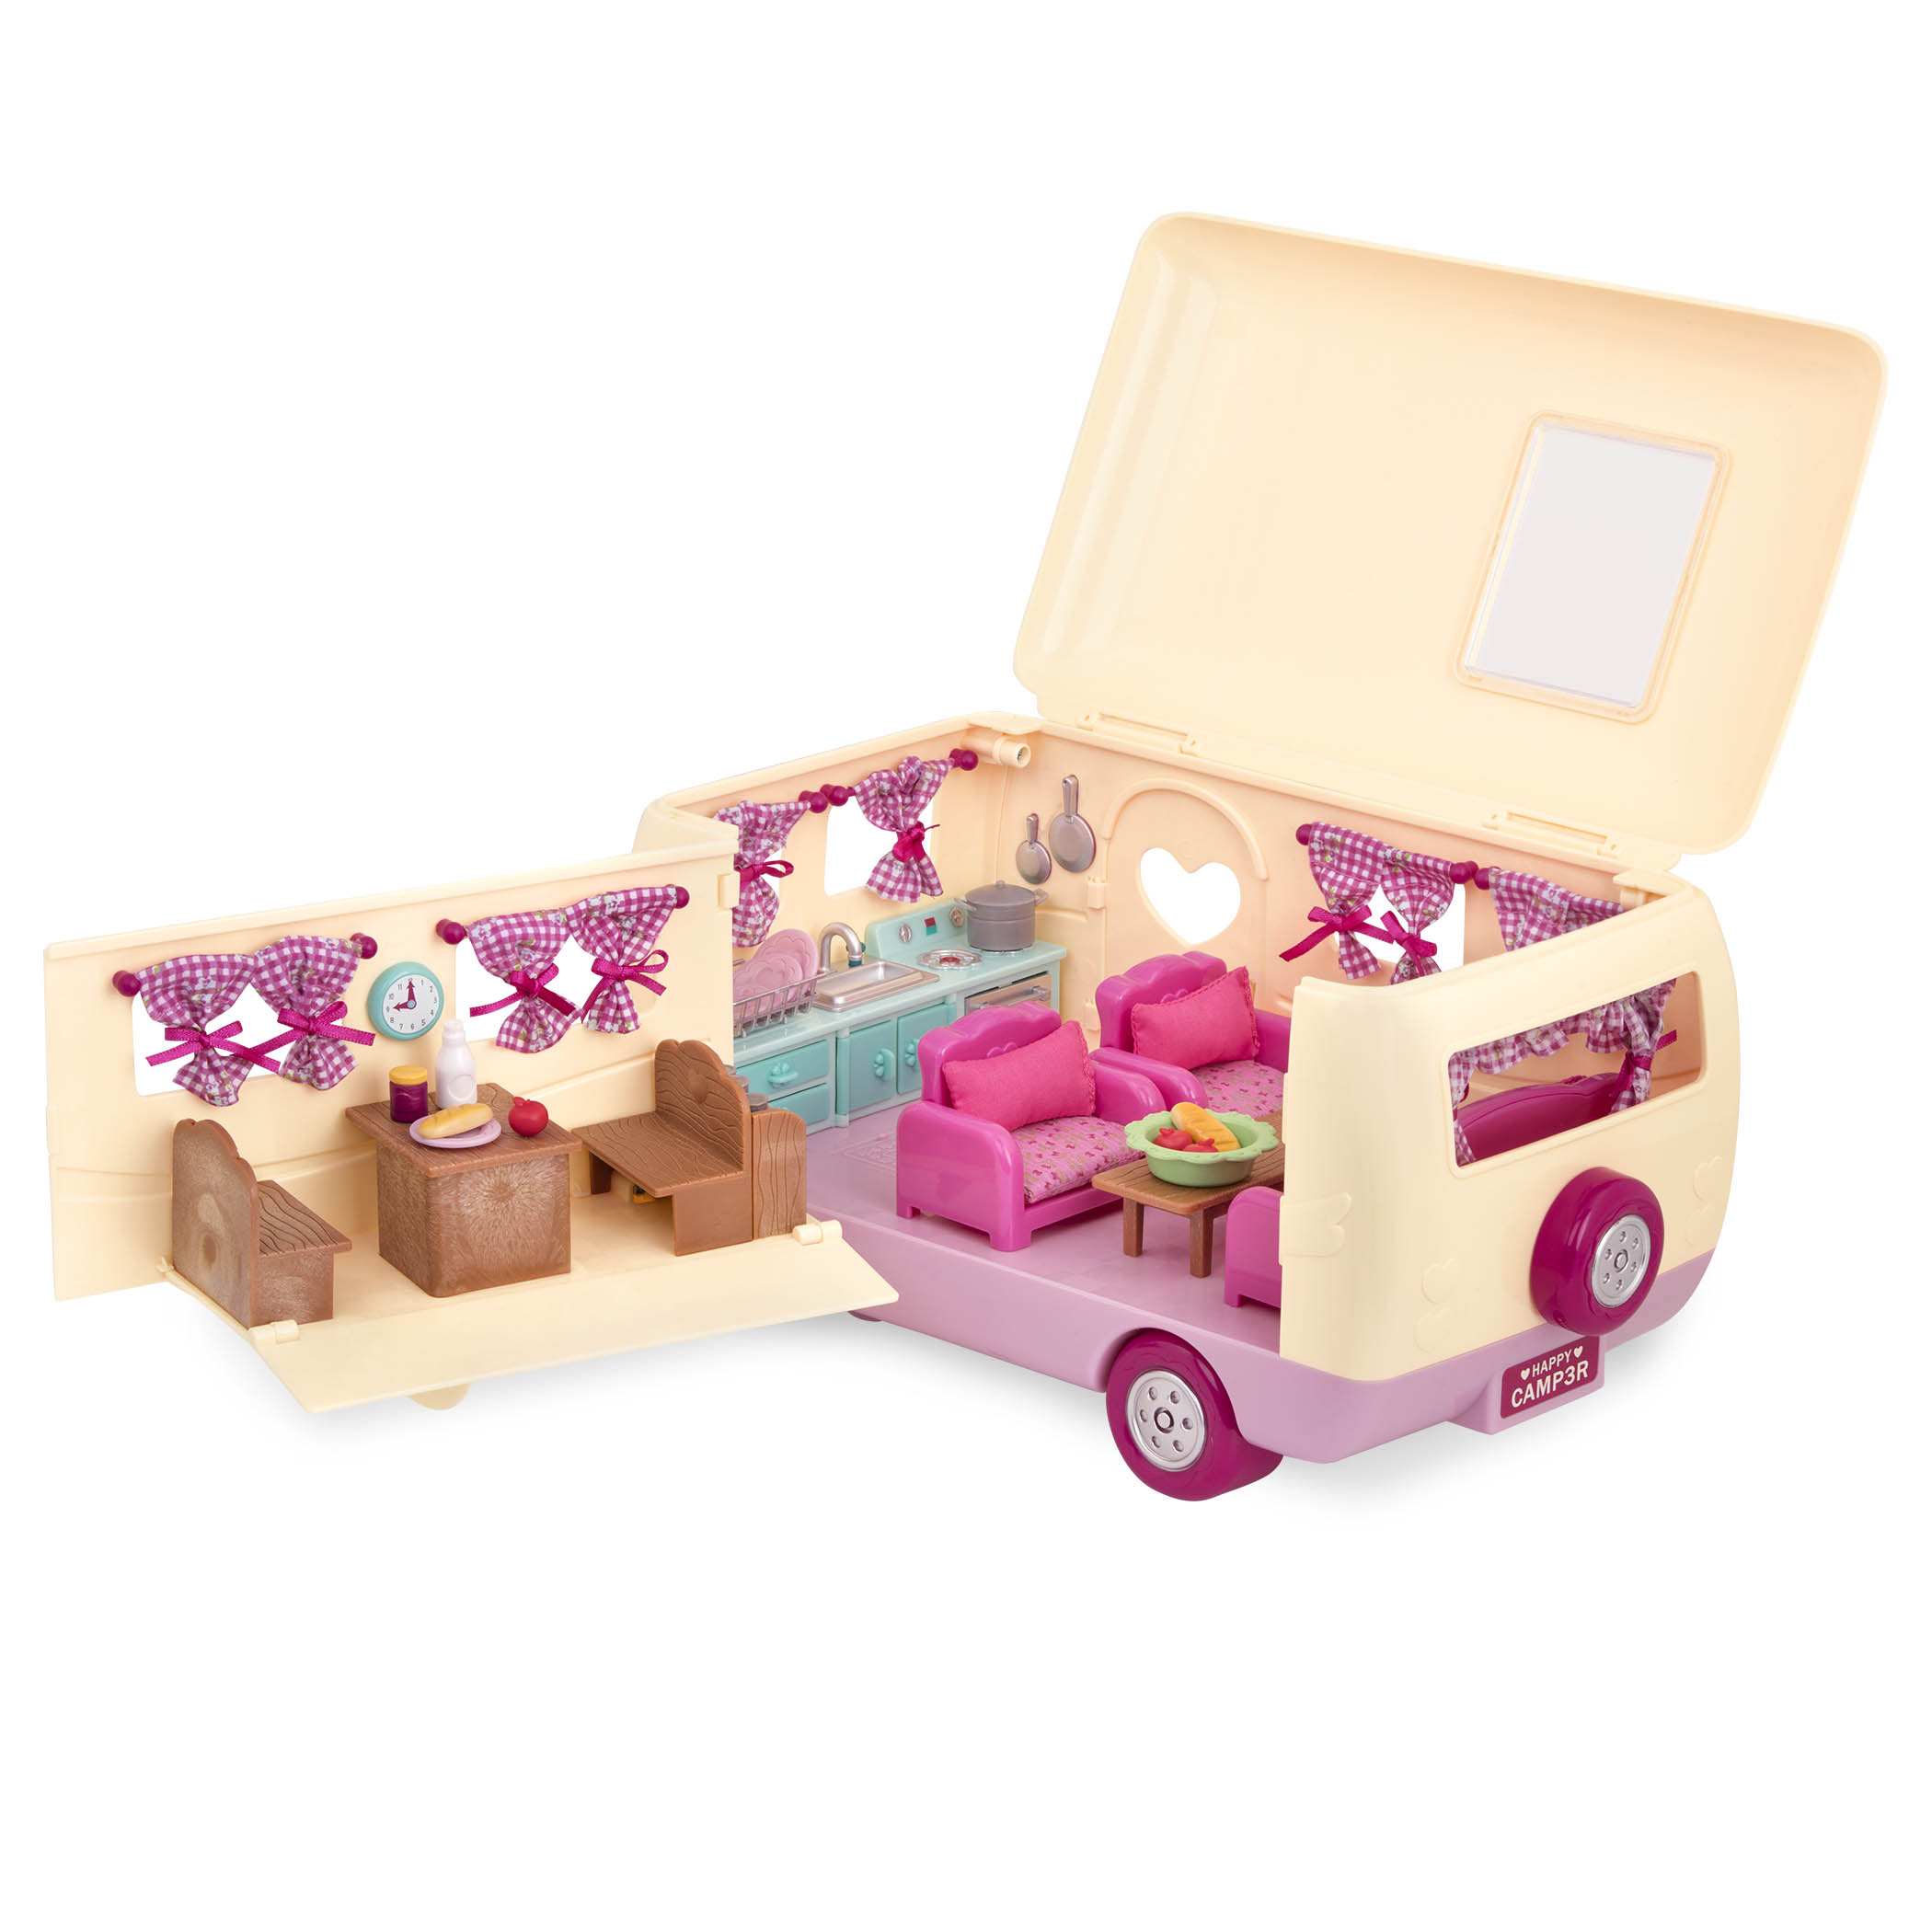 for sale online Li'l Woodzeez Happy Camper Toy Car and Accessories 062243251724 